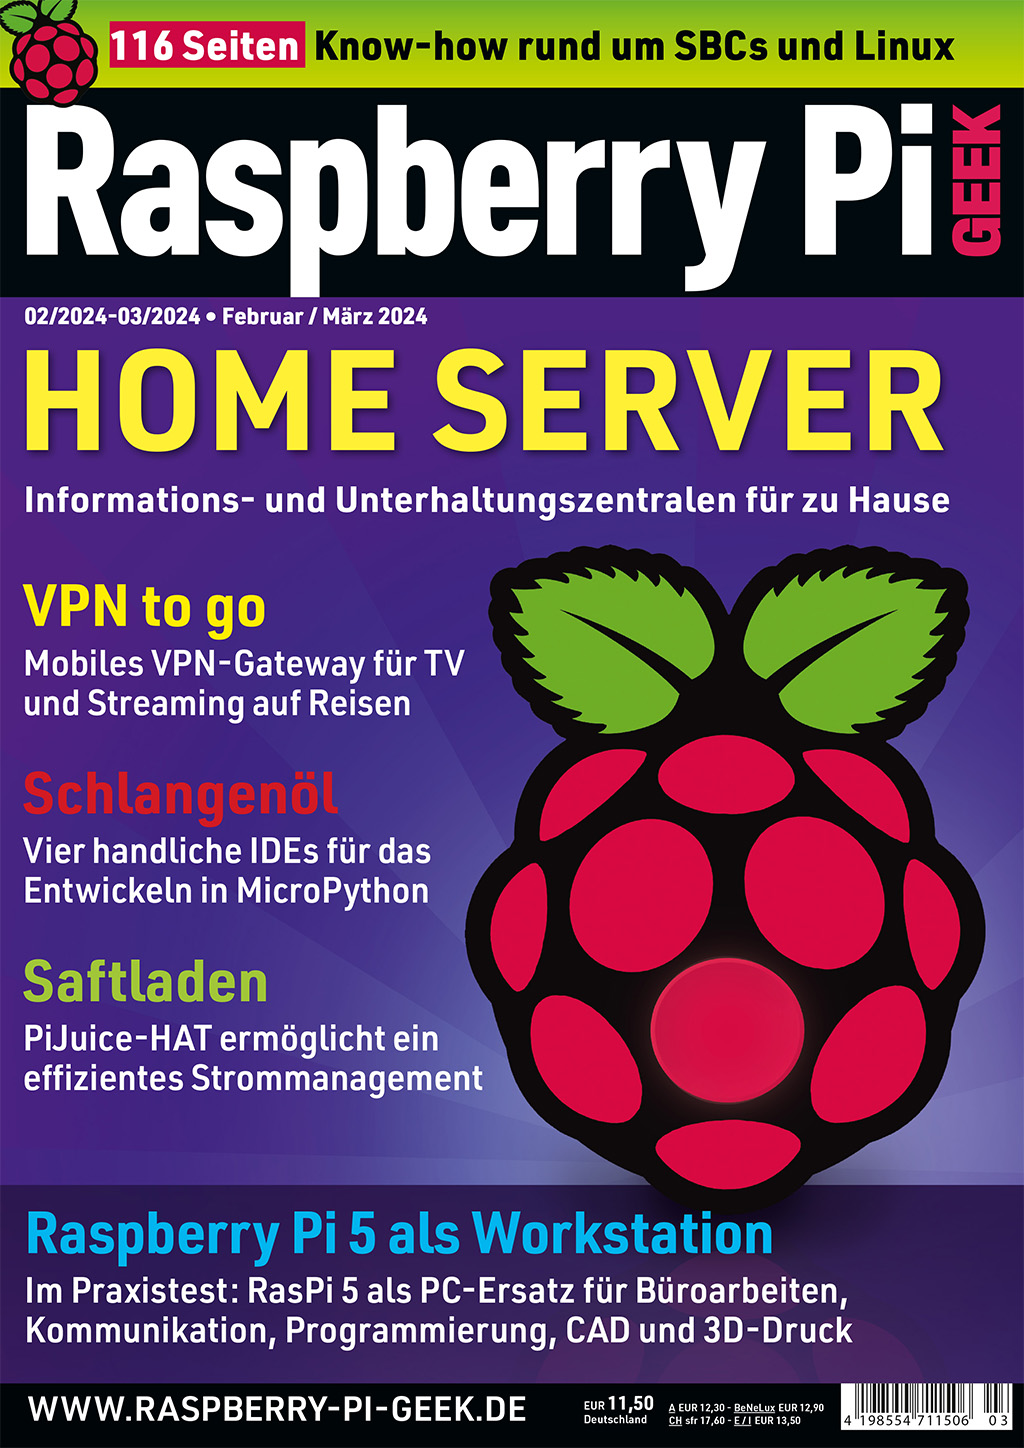 Raspberry Pi Geek ePaper 03/2024